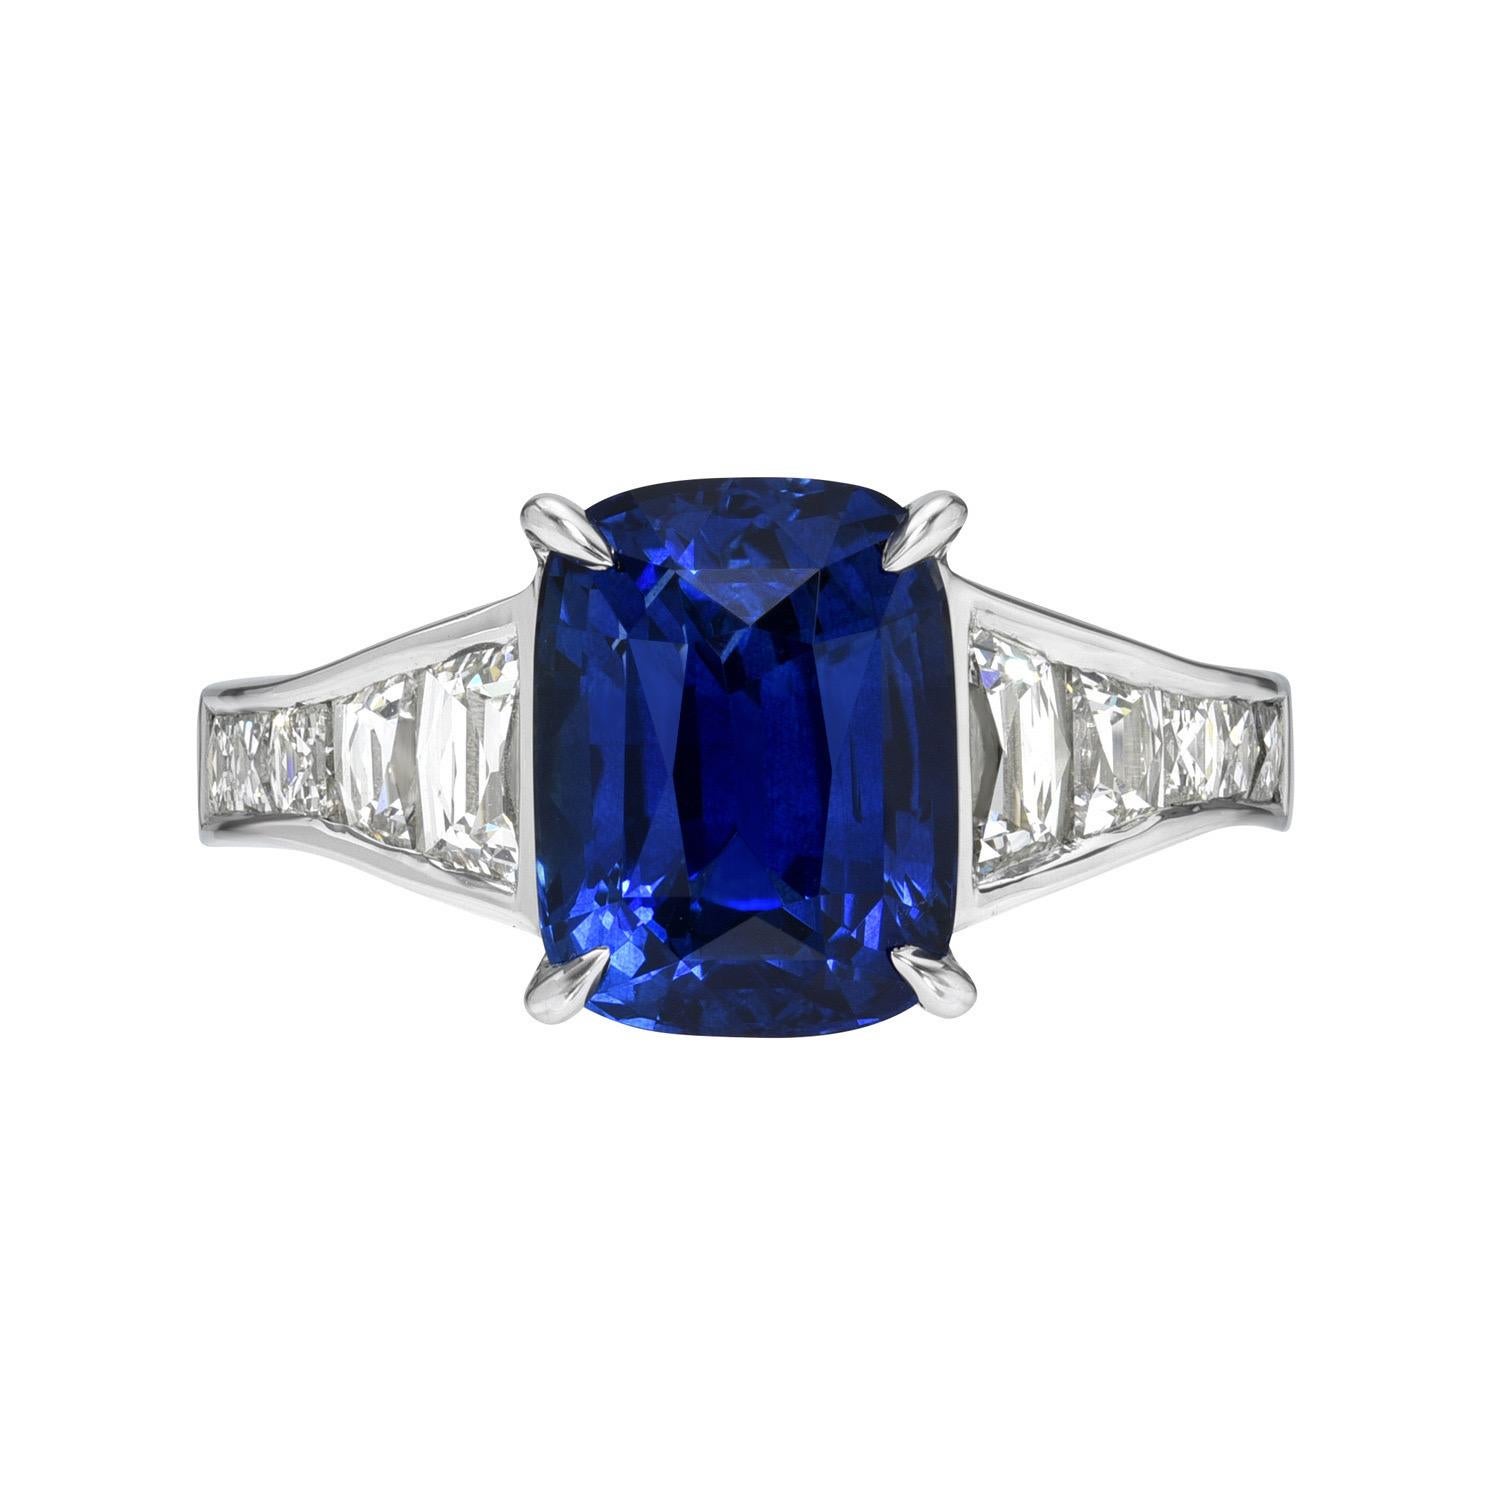 Cushion Cut Sapphire Ring 4.54 Carat Royal Blue Cushion Sri Lanka For Sale